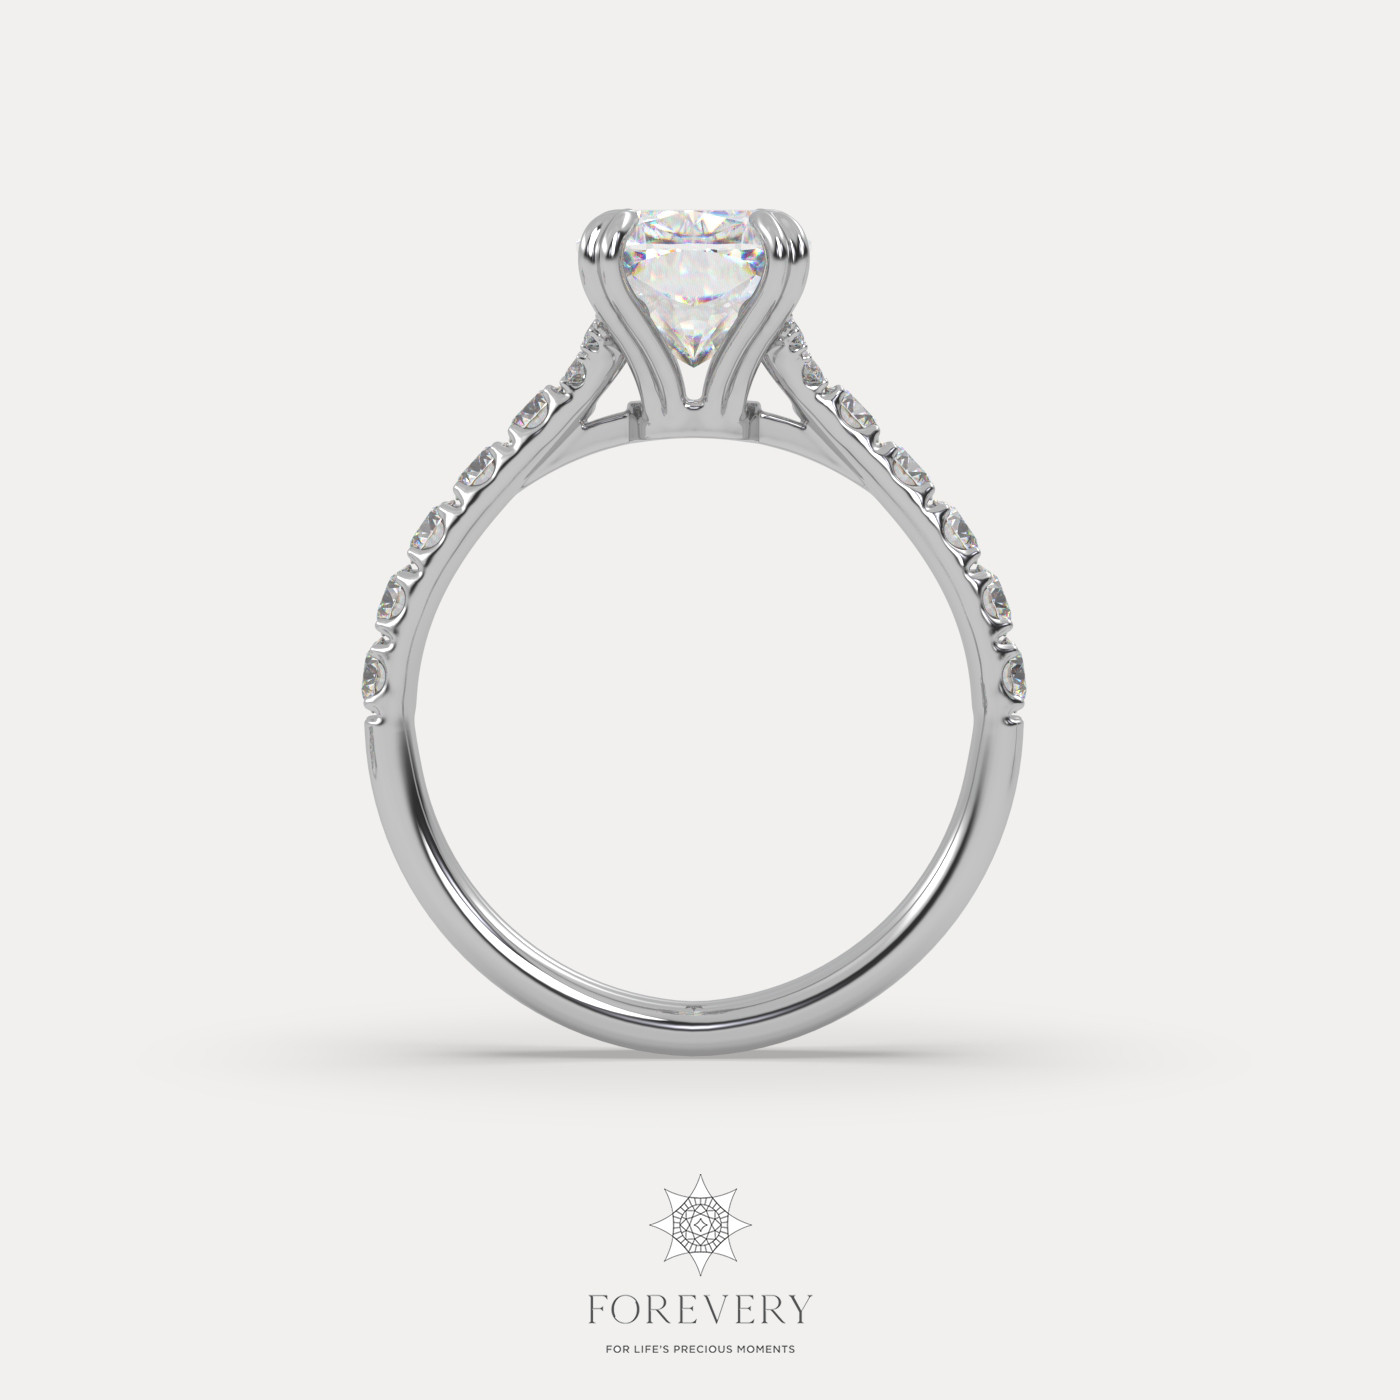 18K WHITE GOLD Cushion Cut Pave-Style Diamond Engagement Ring